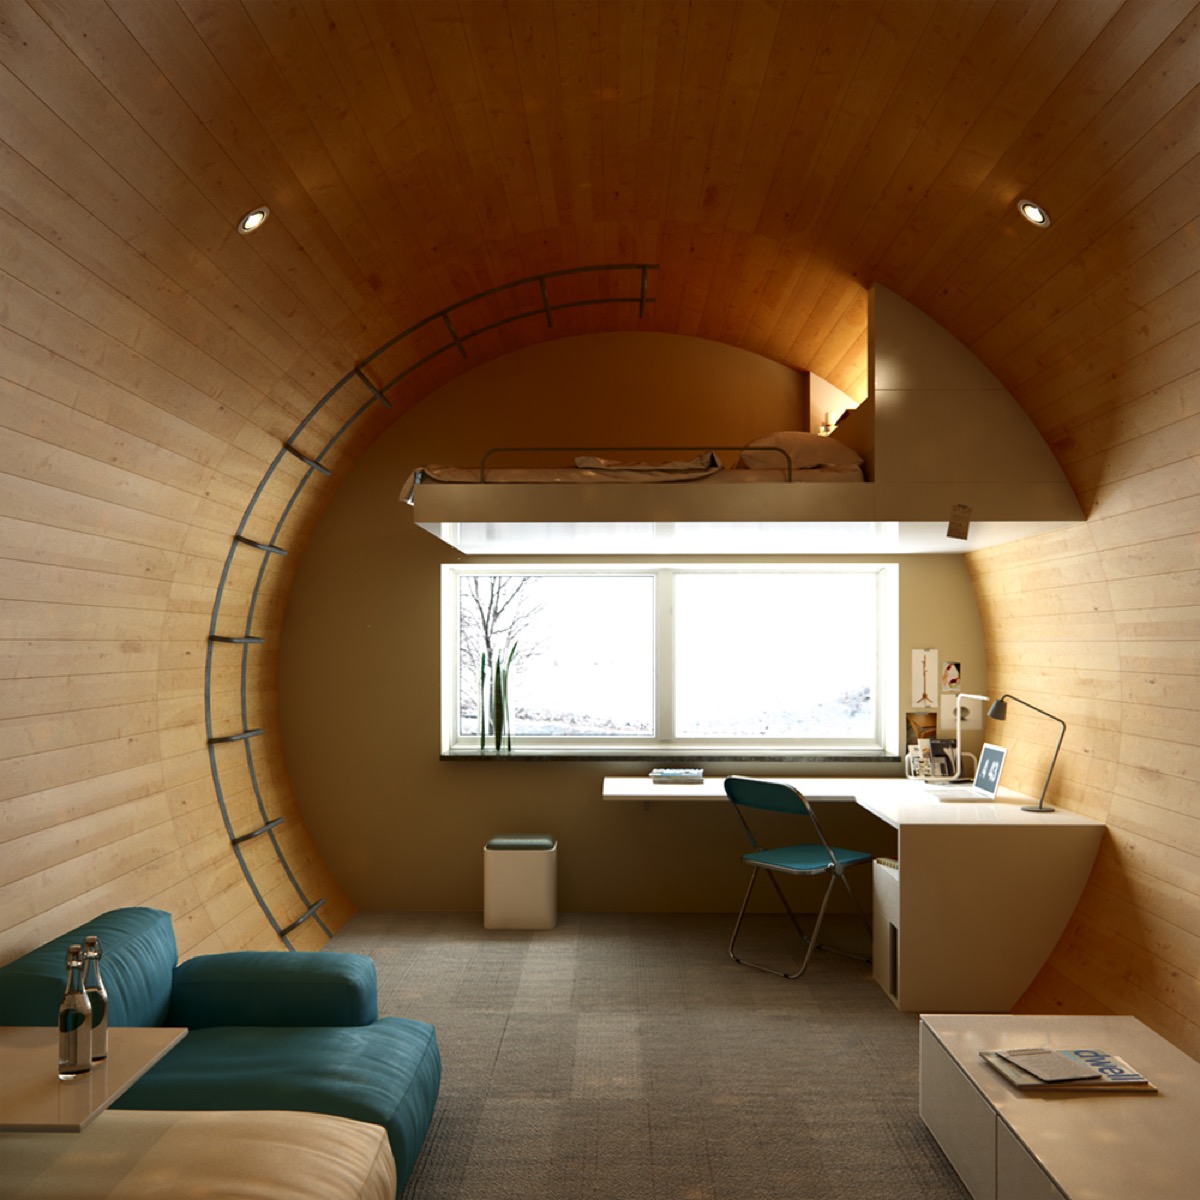 amazing-round-bedroom-design-with-loft "width =" 1200 "height =" 1200 "srcset =" https://mileray.com/wp-content/uploads/2017/05/amazing-round-bedroom-design -with-loft-Only-Studio.jpg 1200w, https://mileray.com/wp-content/uploads/2017/05/amazing-round-bedroom-design-with-loft-Only-Studio-150x150.jpg 150w , https://mileray.com/wp-content/uploads/2017/05/amazing-round-bedroom-design-with-loft-Only-Studio-300x300.jpg 300w, https://mileray.com/wp- content / uploads / 2017/05 / amazing-round-bedroom-design-with-loft-only-studio-768x768.jpg 768w, https://mileray.com/wp-content/uploads/2017/05/amazing-round -bedroom-design-with-loft-Only-Studio-1024x1024.jpg 1024w, https://mileray.com/wp-content/uploads/2017/05/amazing-round-bedroom-design-with-loft-Only- Studio-696x696.jpg 696w, https://mileray.com/wp-content/uploads/2017/05/amazing-round-bedroom-design-with-loft-Only-Studio-1068x1068.jpg 1068w, https: // mileray.com/wp-content/uploads/2017/05/amazing-round-bedroom-de sign-with-loft-Only-Studio-420x420.jpg 420 w "Sizes =" (maximum width: 1200px) 100vw, 1200px